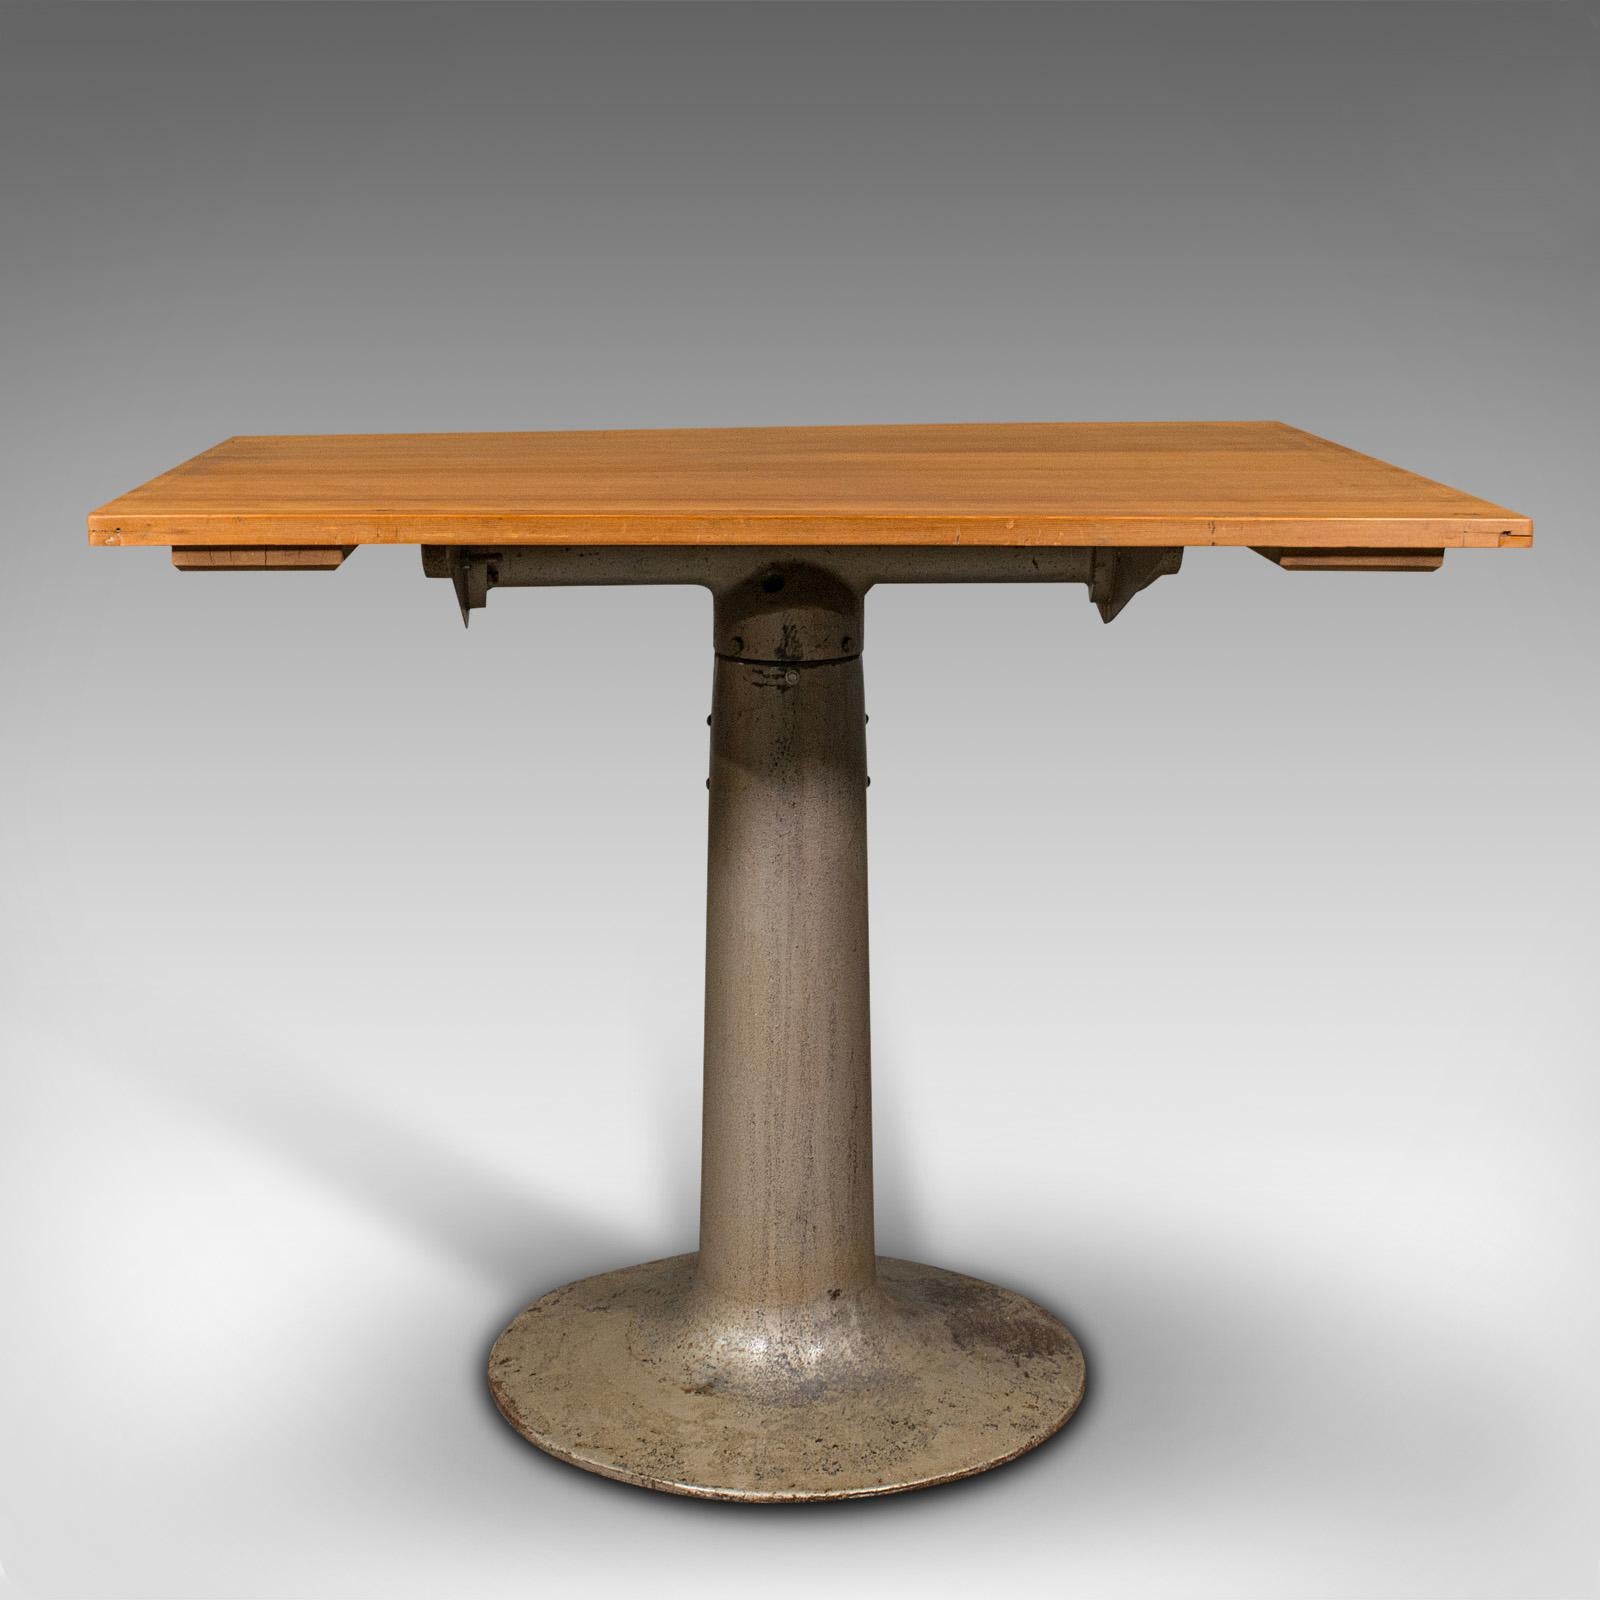 20th Century Vintage Pedestal Table, English, Beech, Pine, Kitchen, Desk, Mid Century, C.1950 For Sale